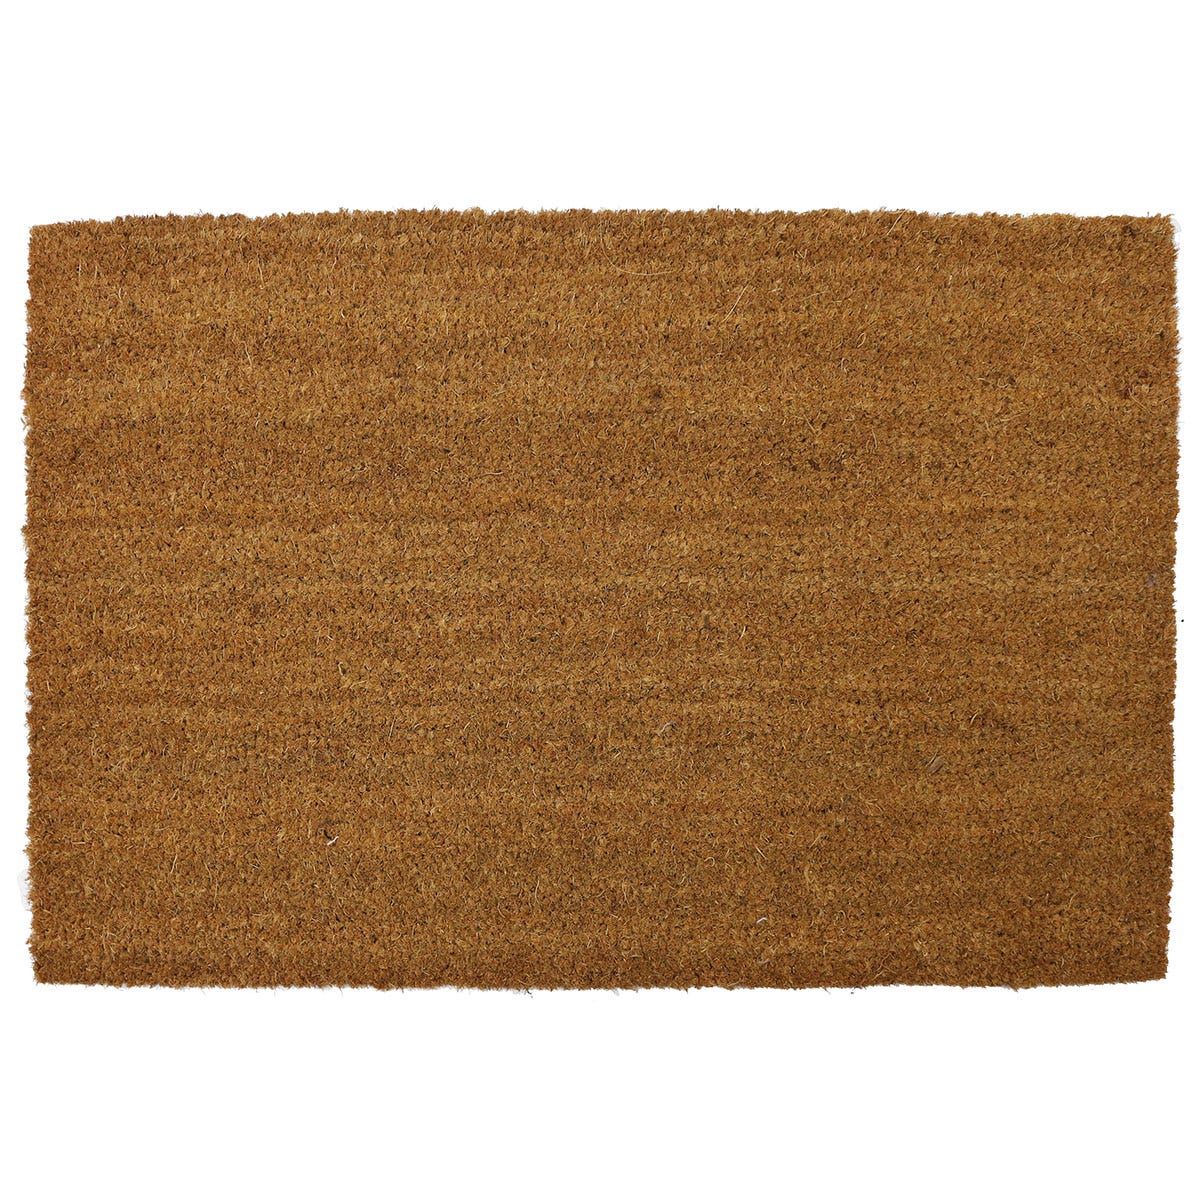 Mud Stopper 45 x 75cm Astley Natrual PVC Backed Coir Doormat